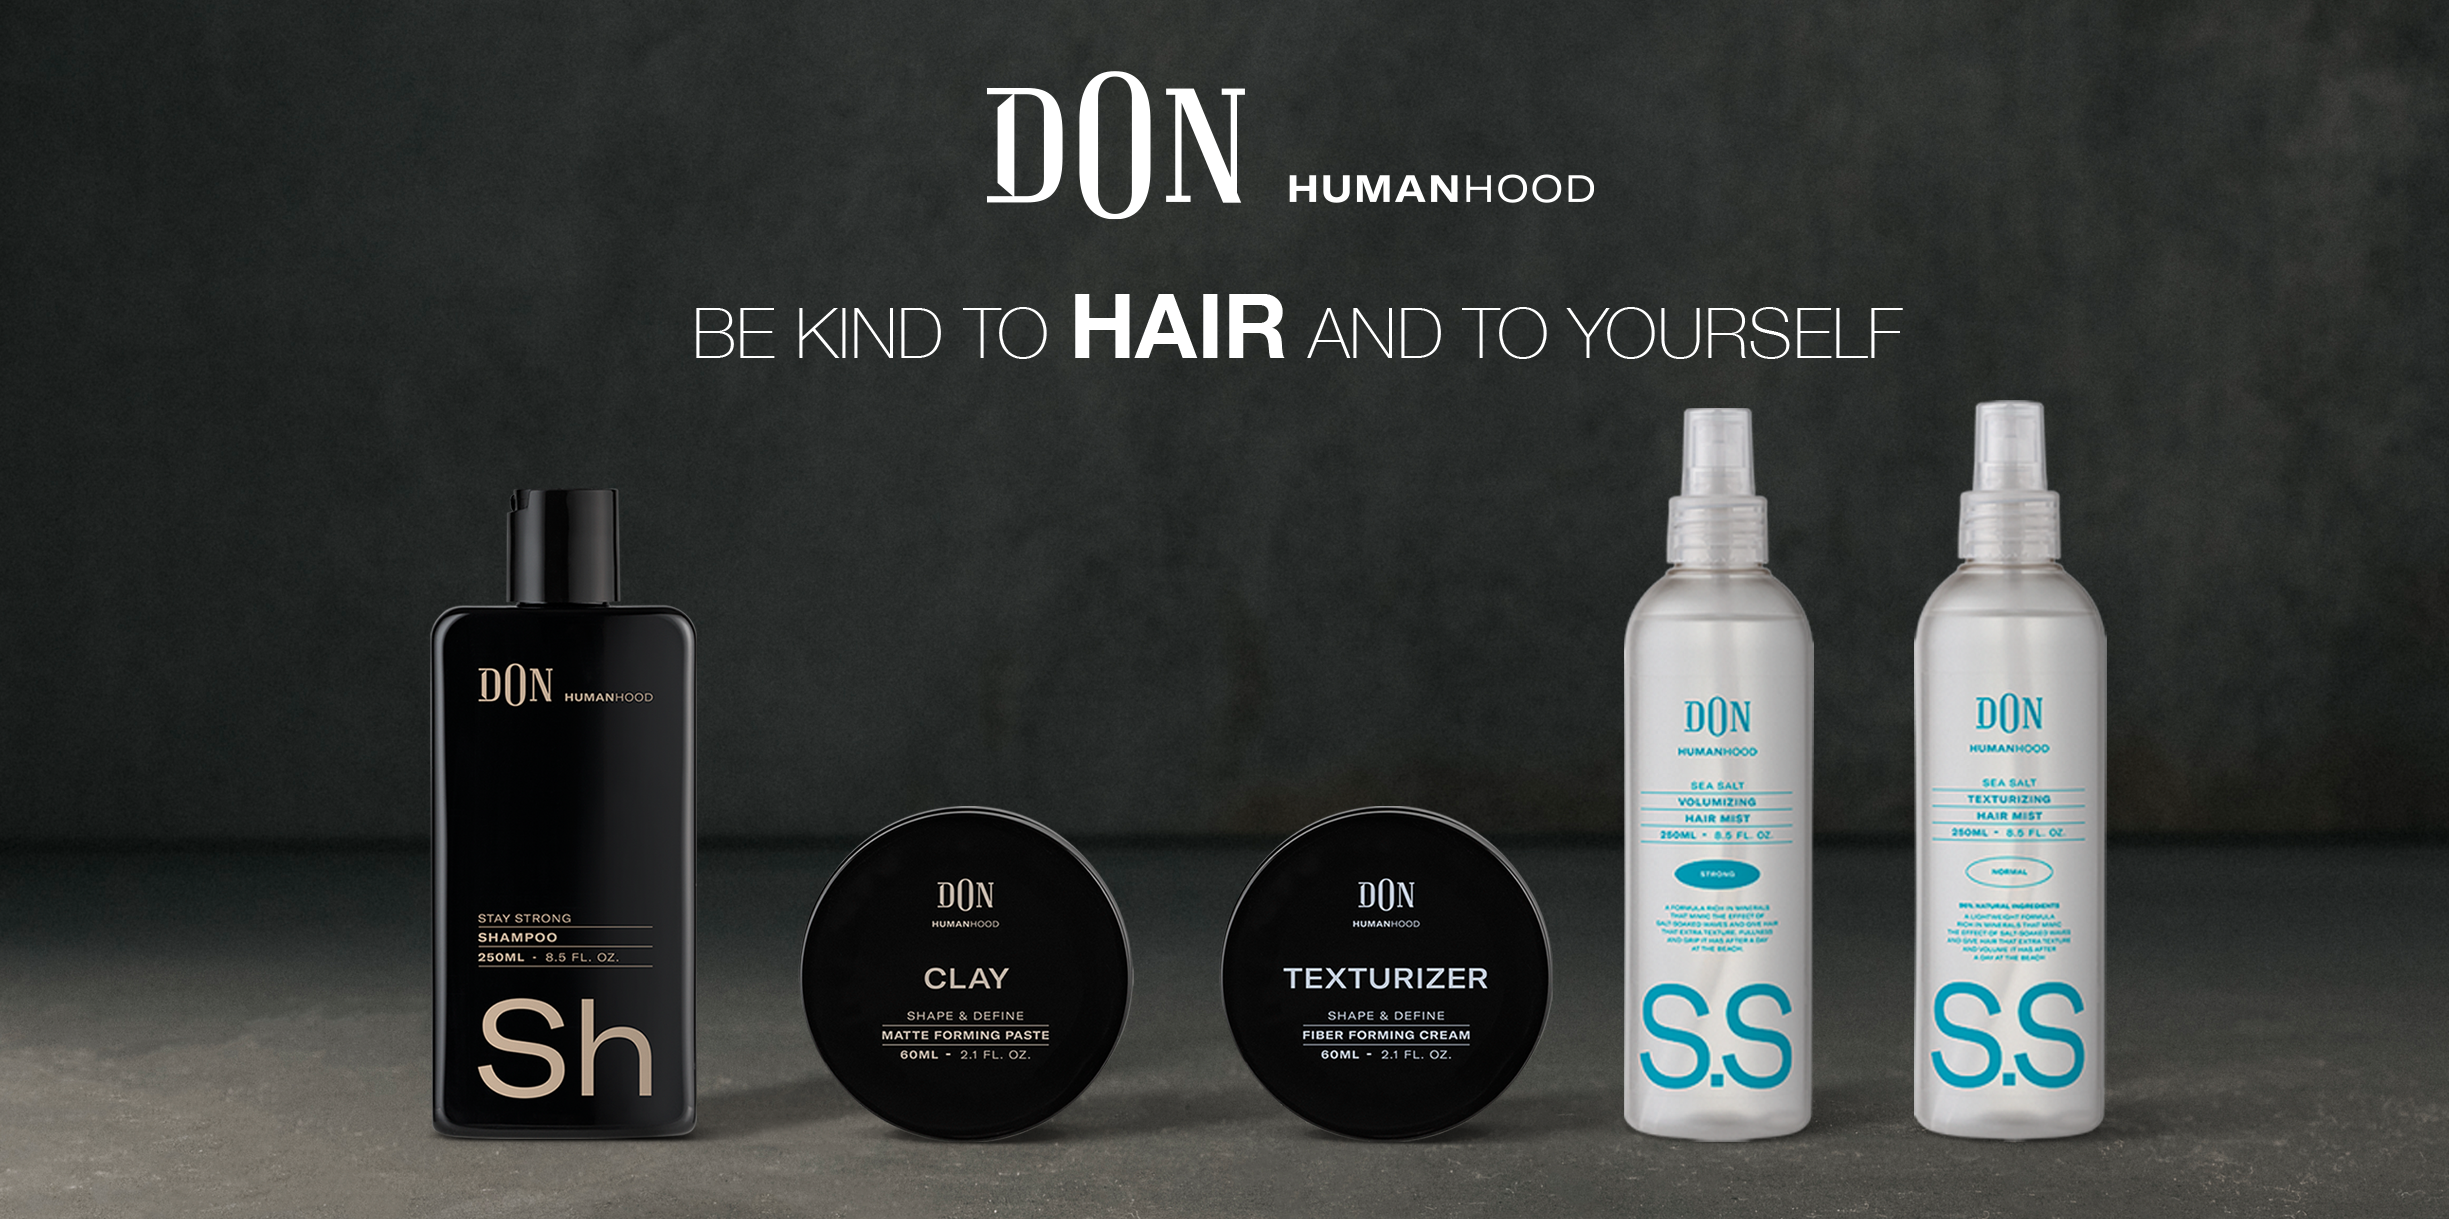 DON HUMANHOOD - HAIR PRODUCTS